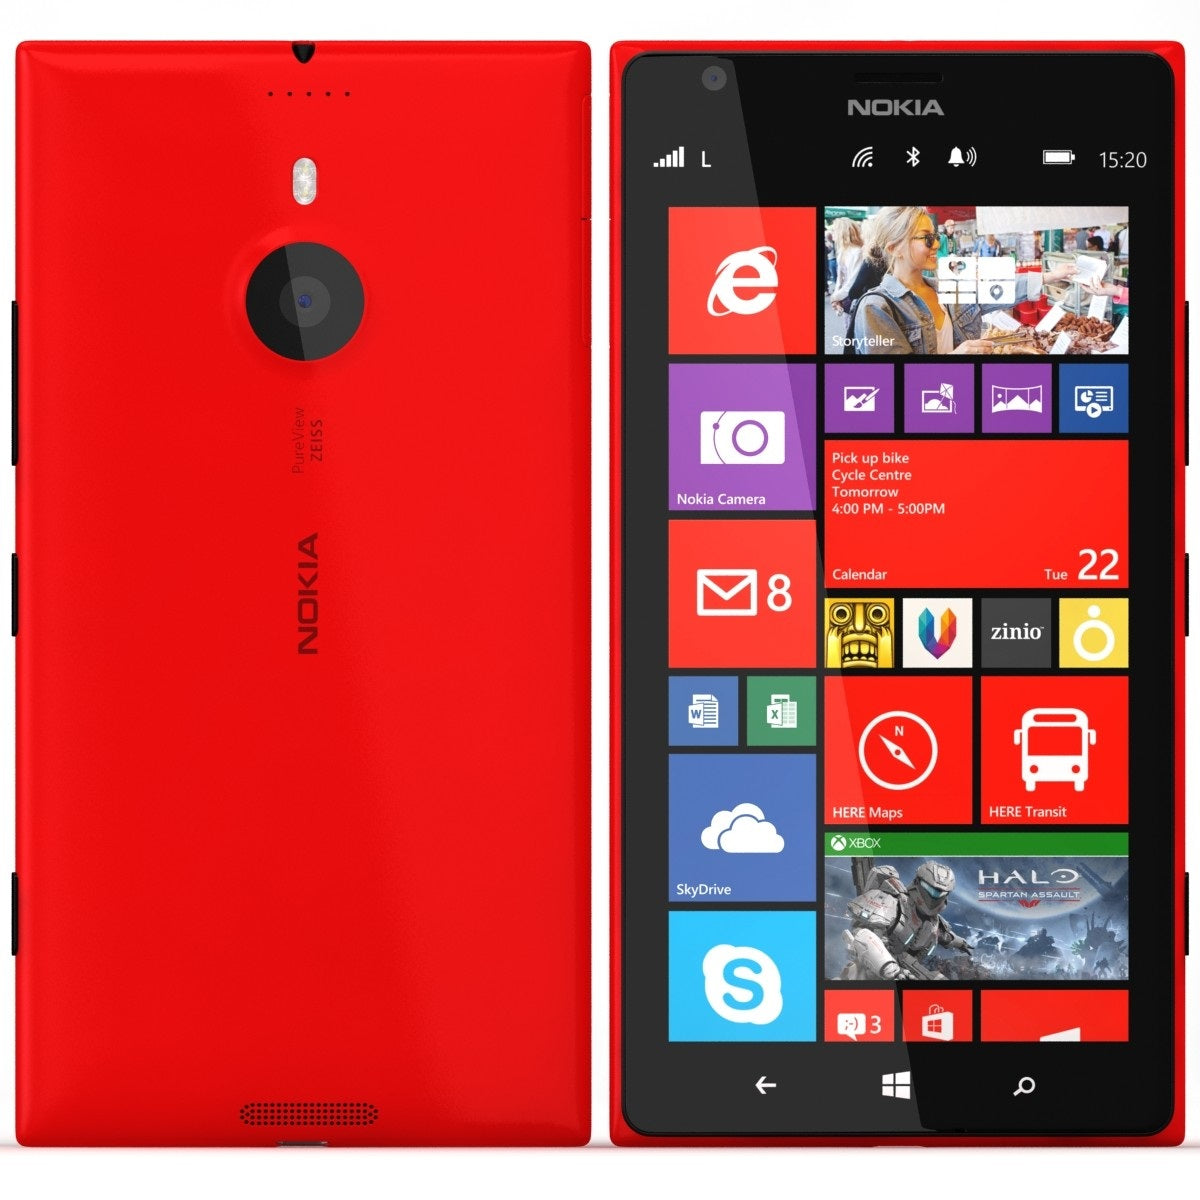 Nokia Lumia 1520 16GB Unlocked GSM 4G LTE Windows 8 Smartphone w